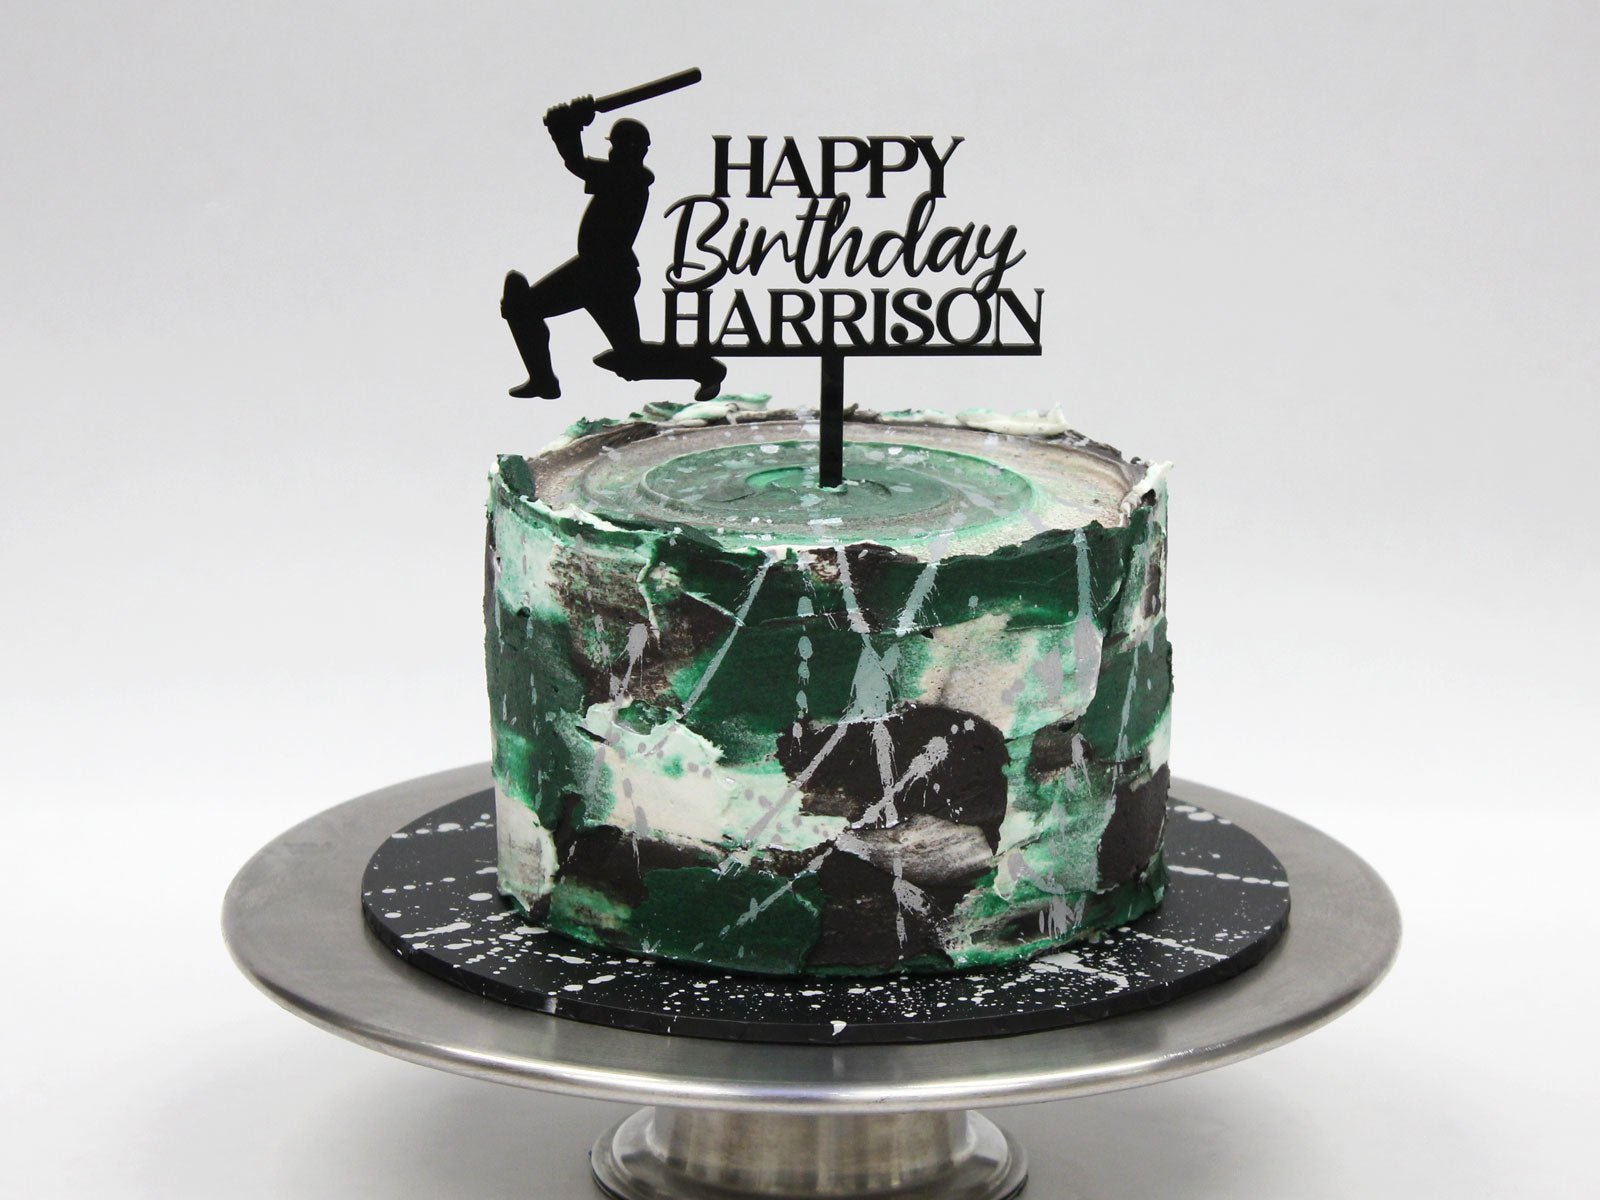 100+ HD Happy Birthday Harrison Cake Images And Shayari